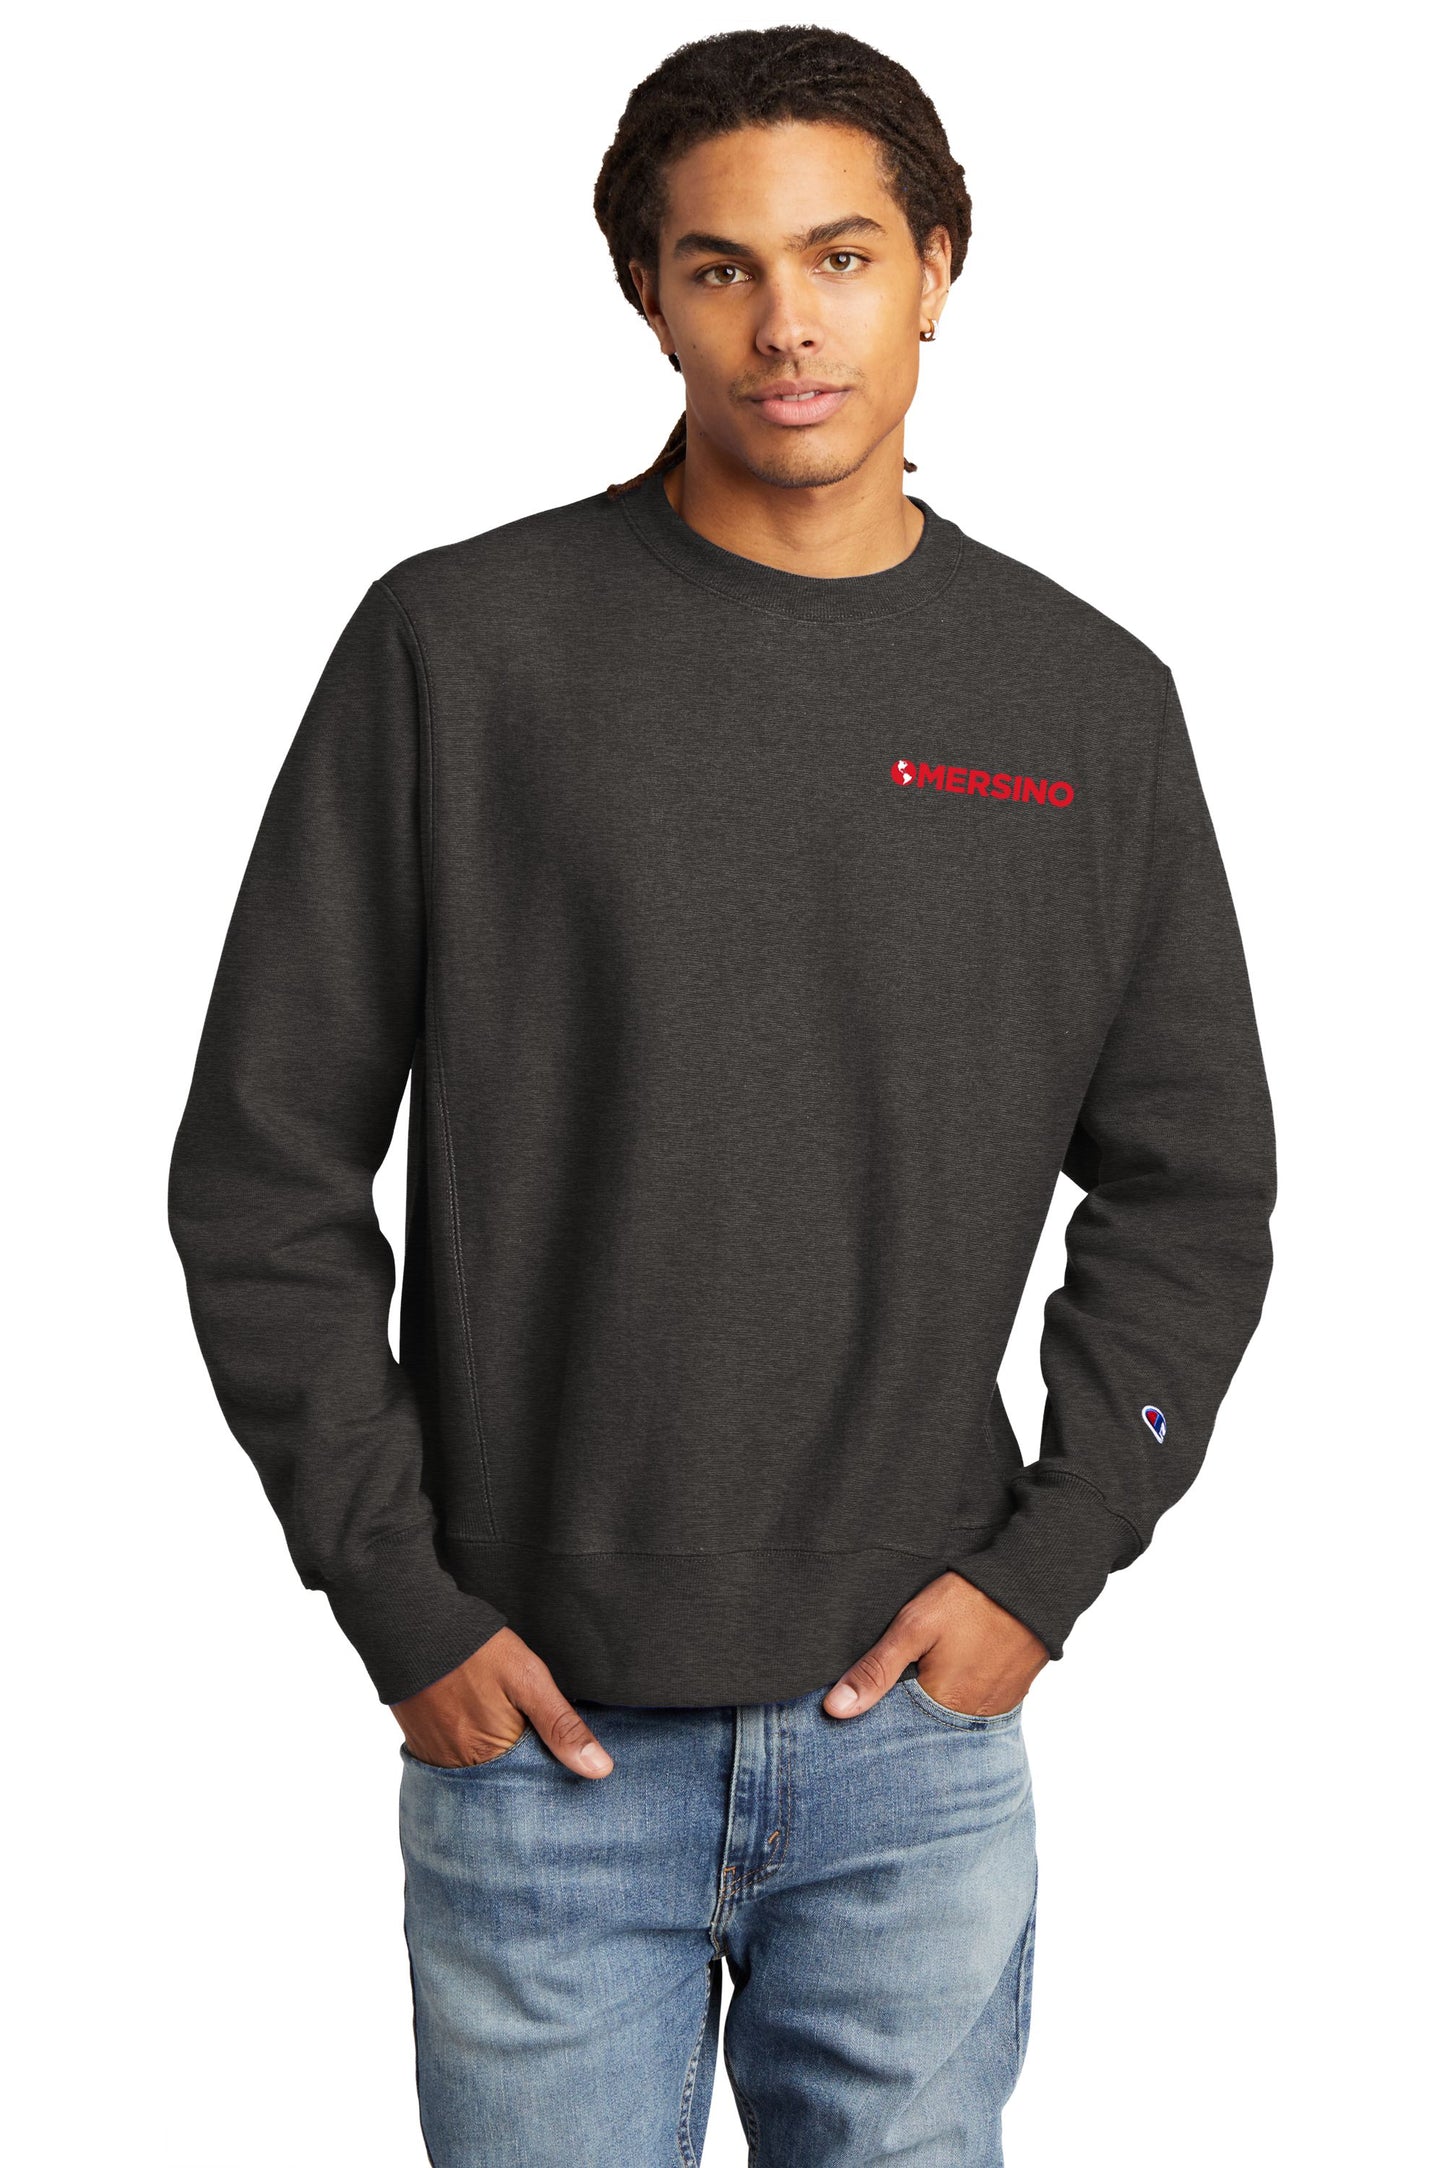 Mersino Champion ® Reverse Weave ® Crewneck Sweatshirt